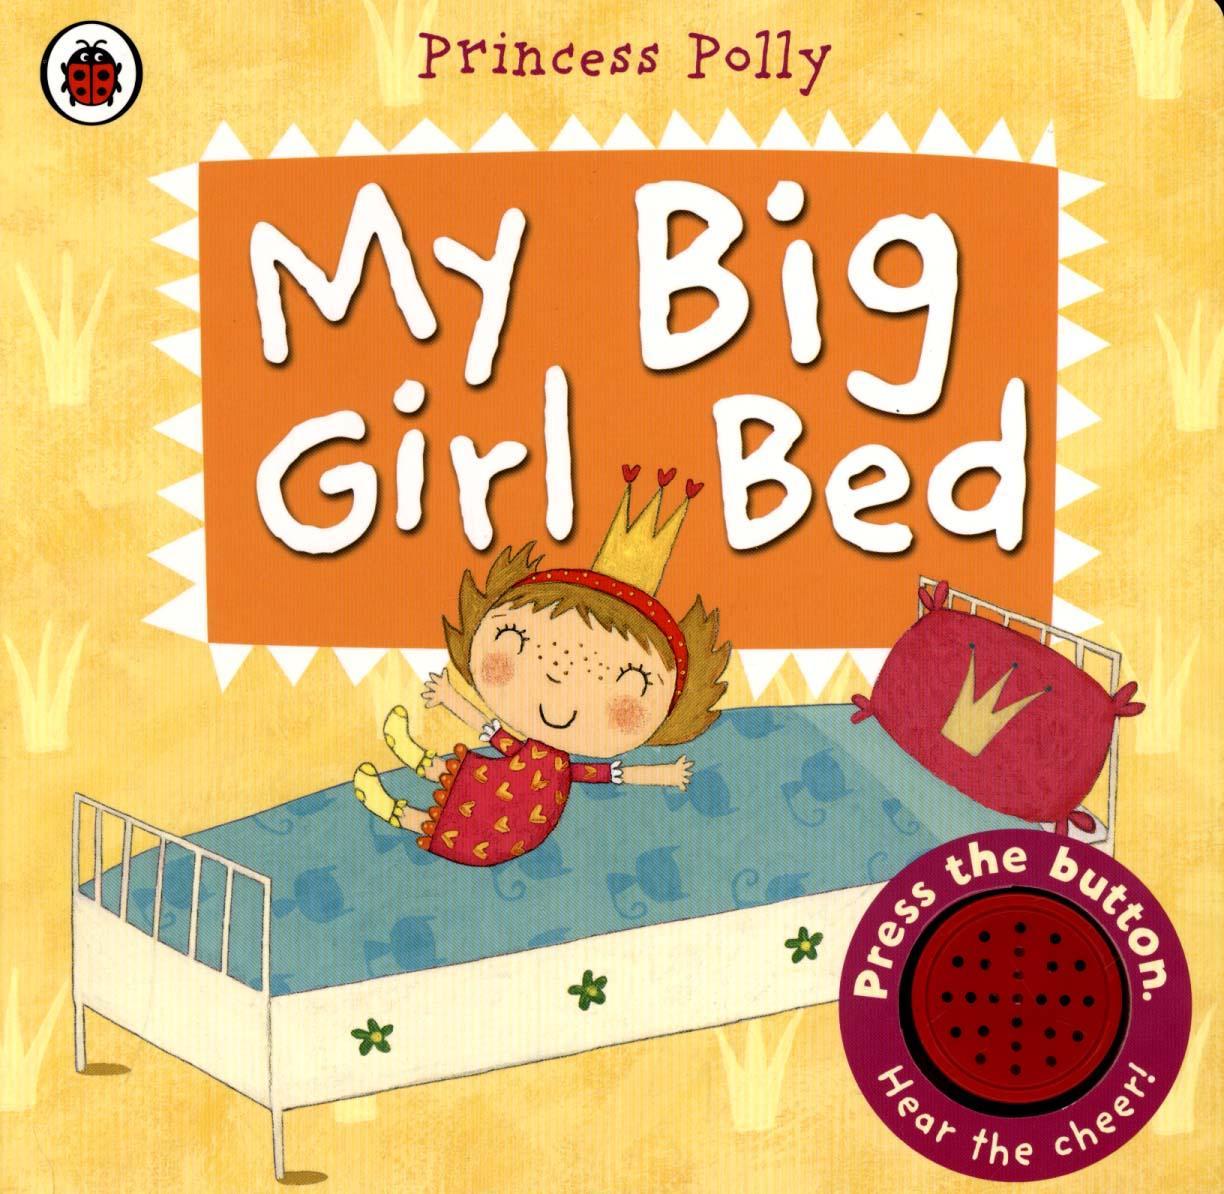 My Big Girl Bed: A Princess Polly book -  